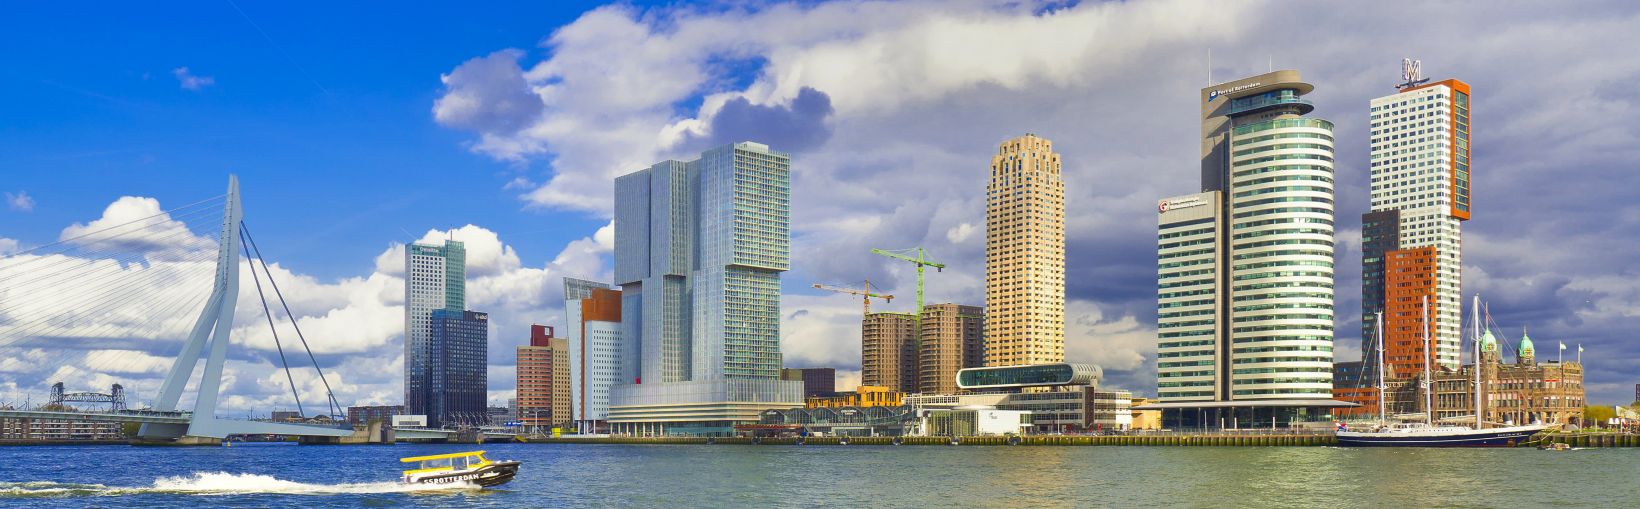 Nieuwe Maas River, Architettura moderna, Rotterdam, Olanda, Olanda, Europa